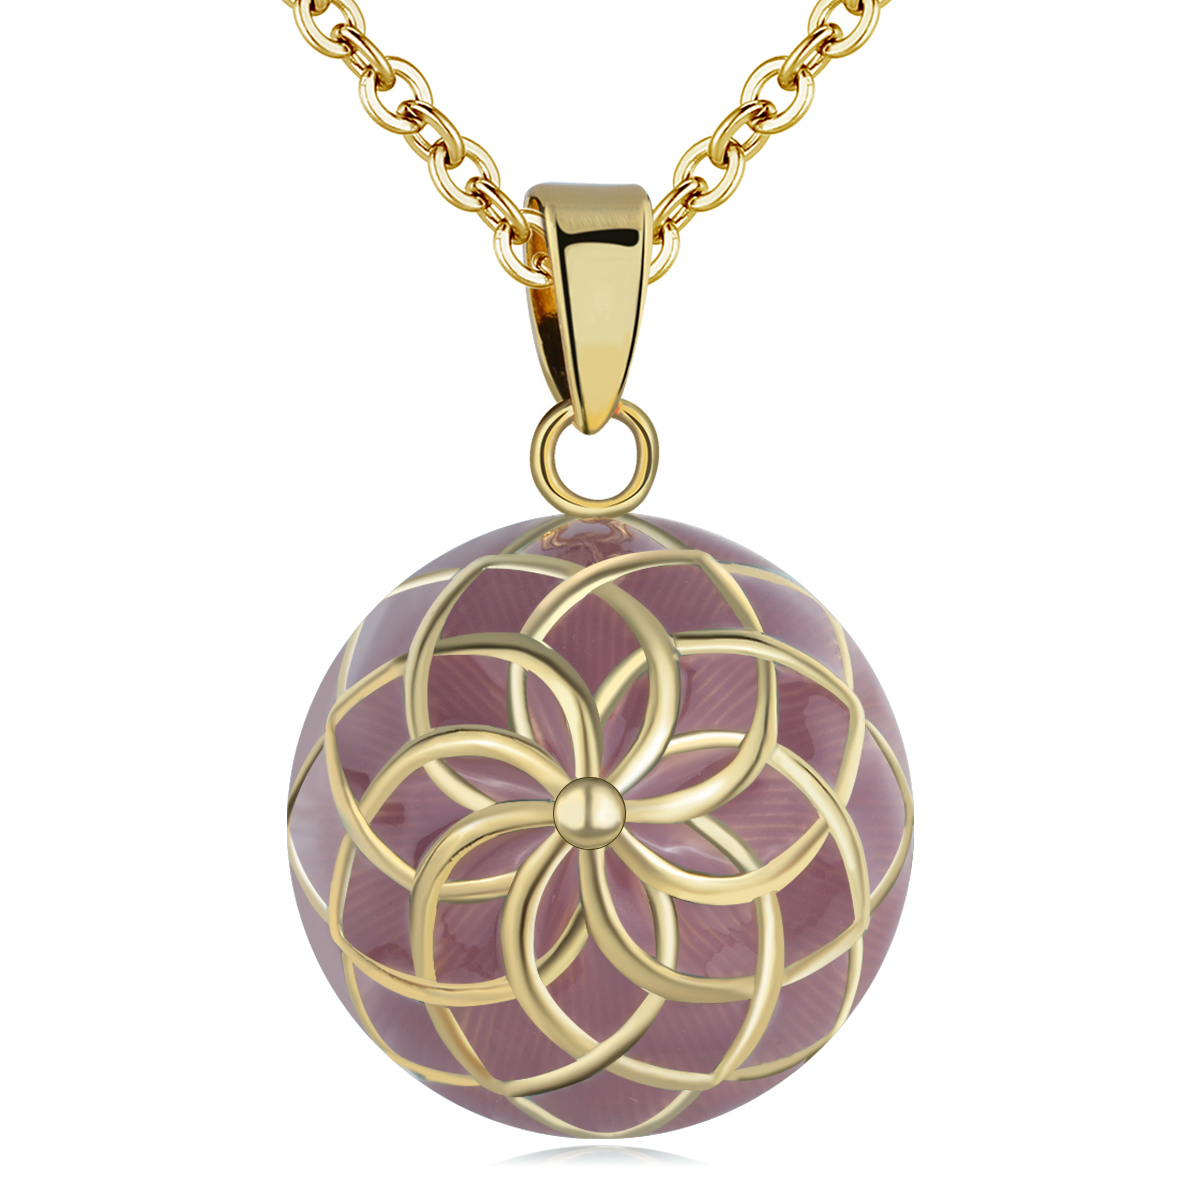 Merryshine Jewelry Red Flower Design Angel Caller Sound Pattern Bola Ball Necklace for Pregnancy Women